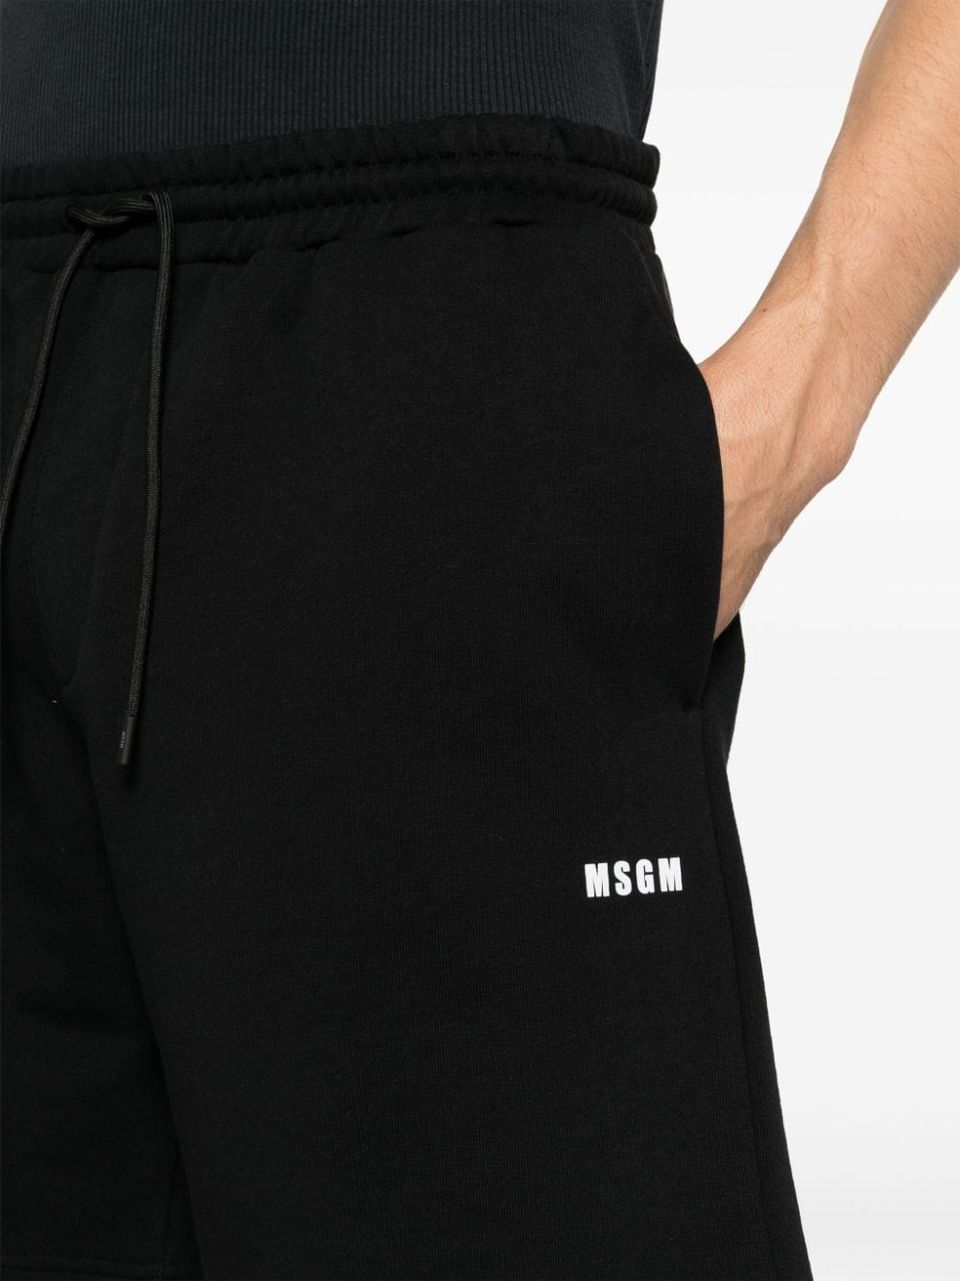 Shorts with logo